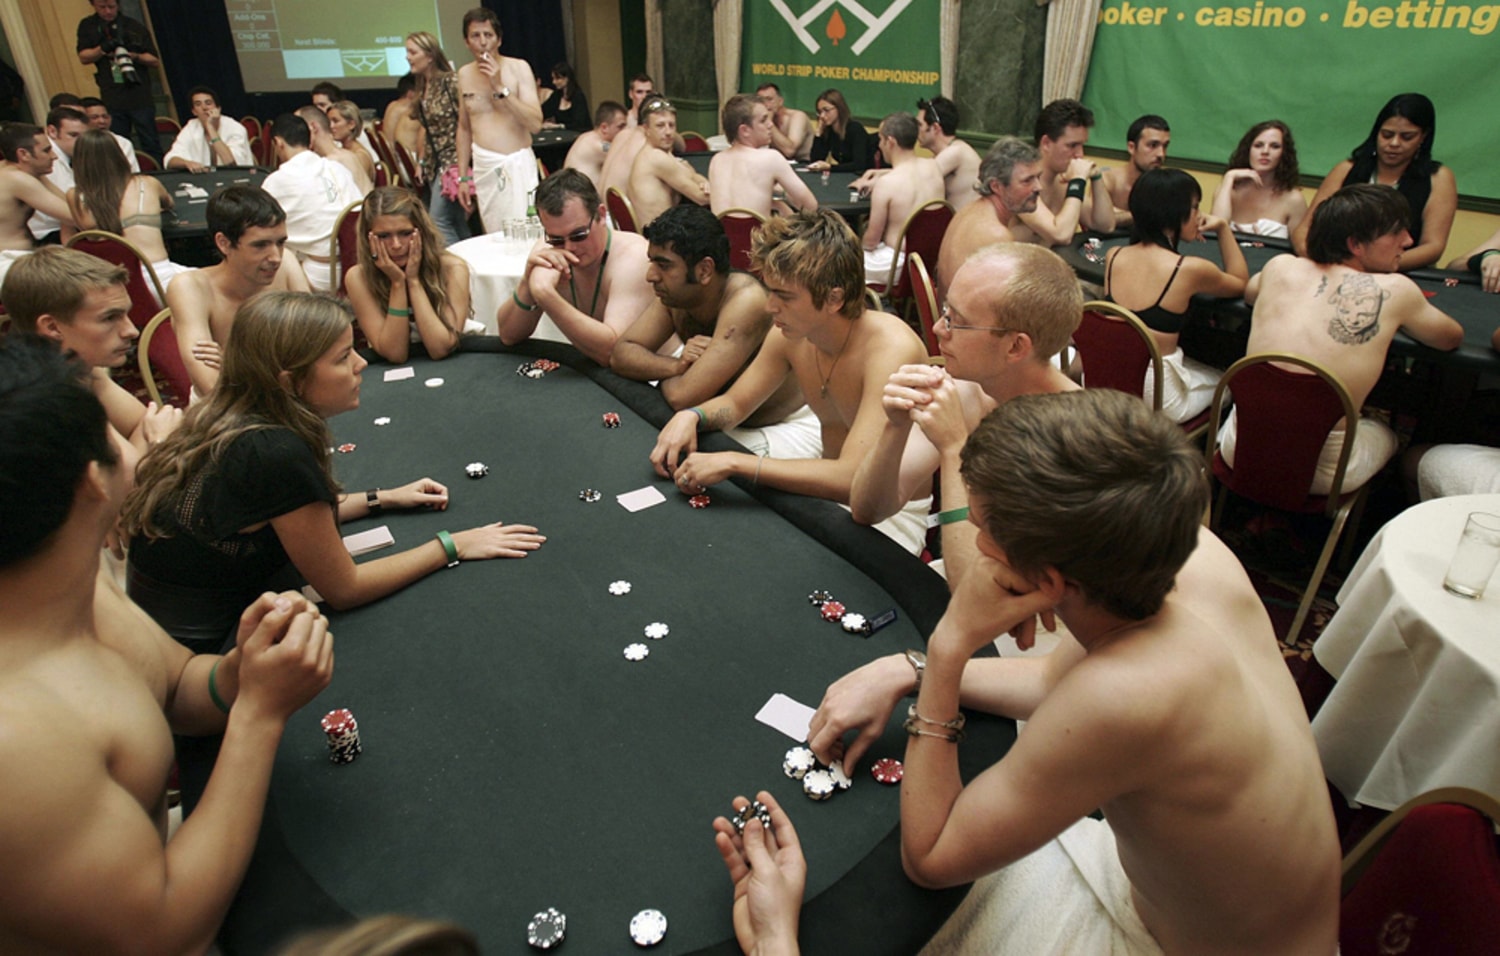 Strip poker championships bring mass a-peel pic